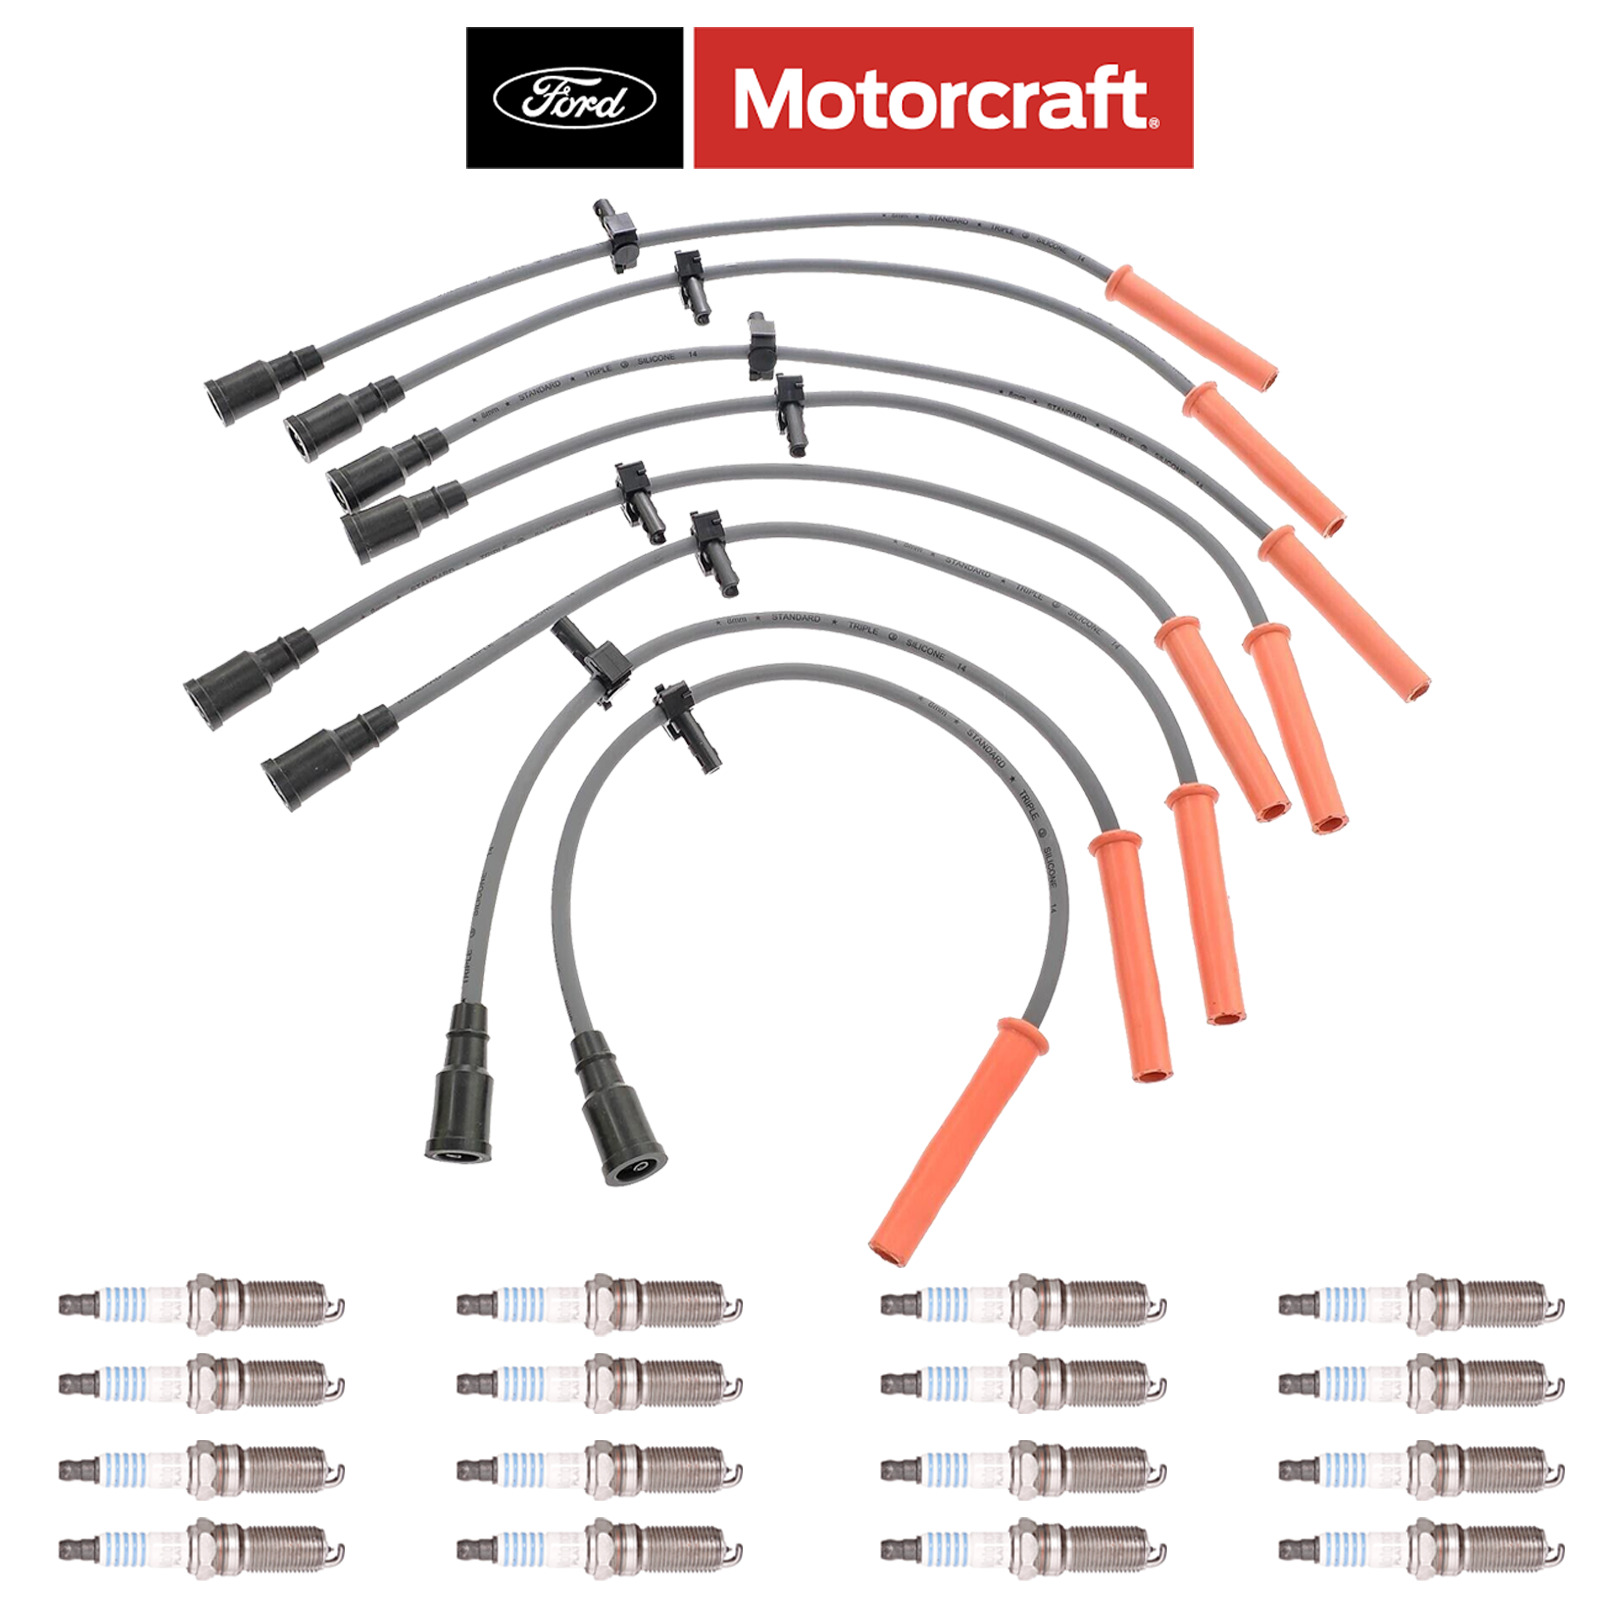 Motorcraft Spark Plug + Wireset For 2010-2012 Ford F-150 F-250 F-350 6.2L V8